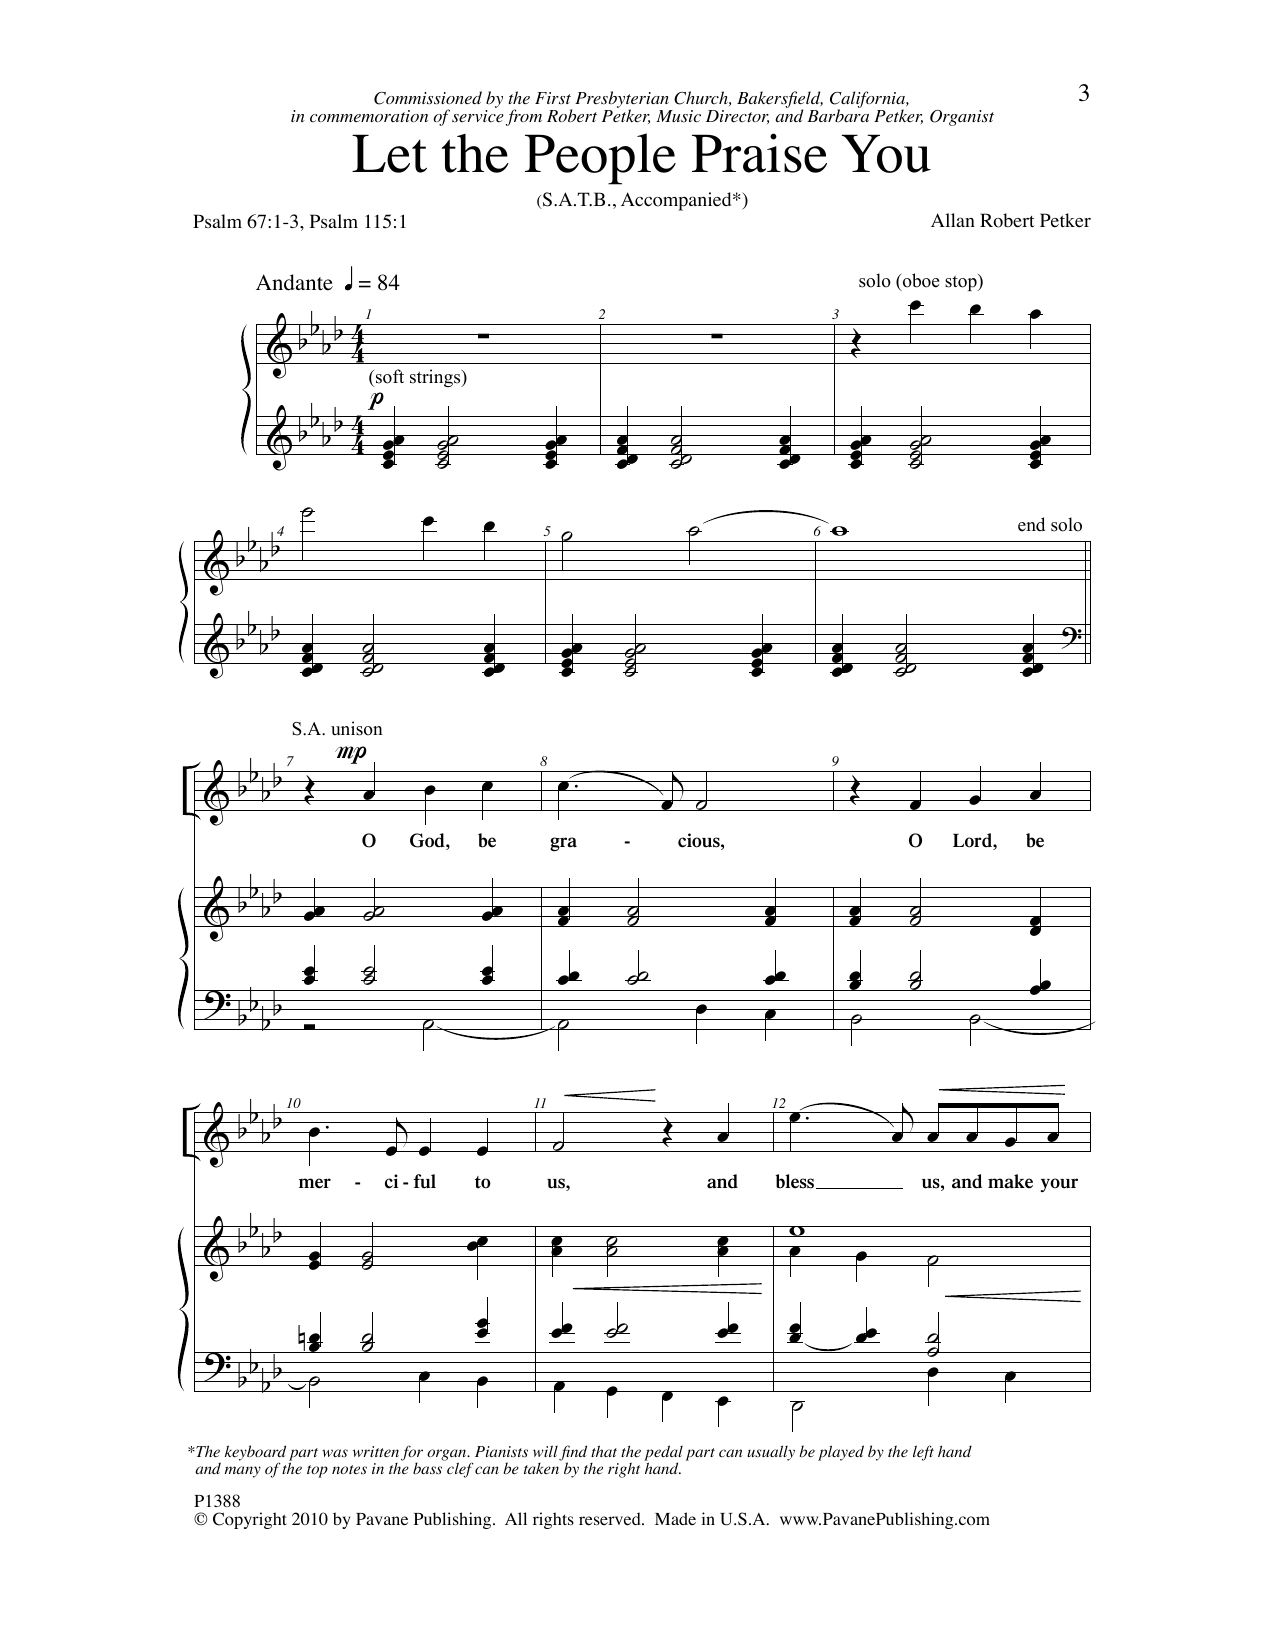 Allan Robert Petker Let The People Praise You Sheet Music Notes & Chords for SATB Choir - Download or Print PDF